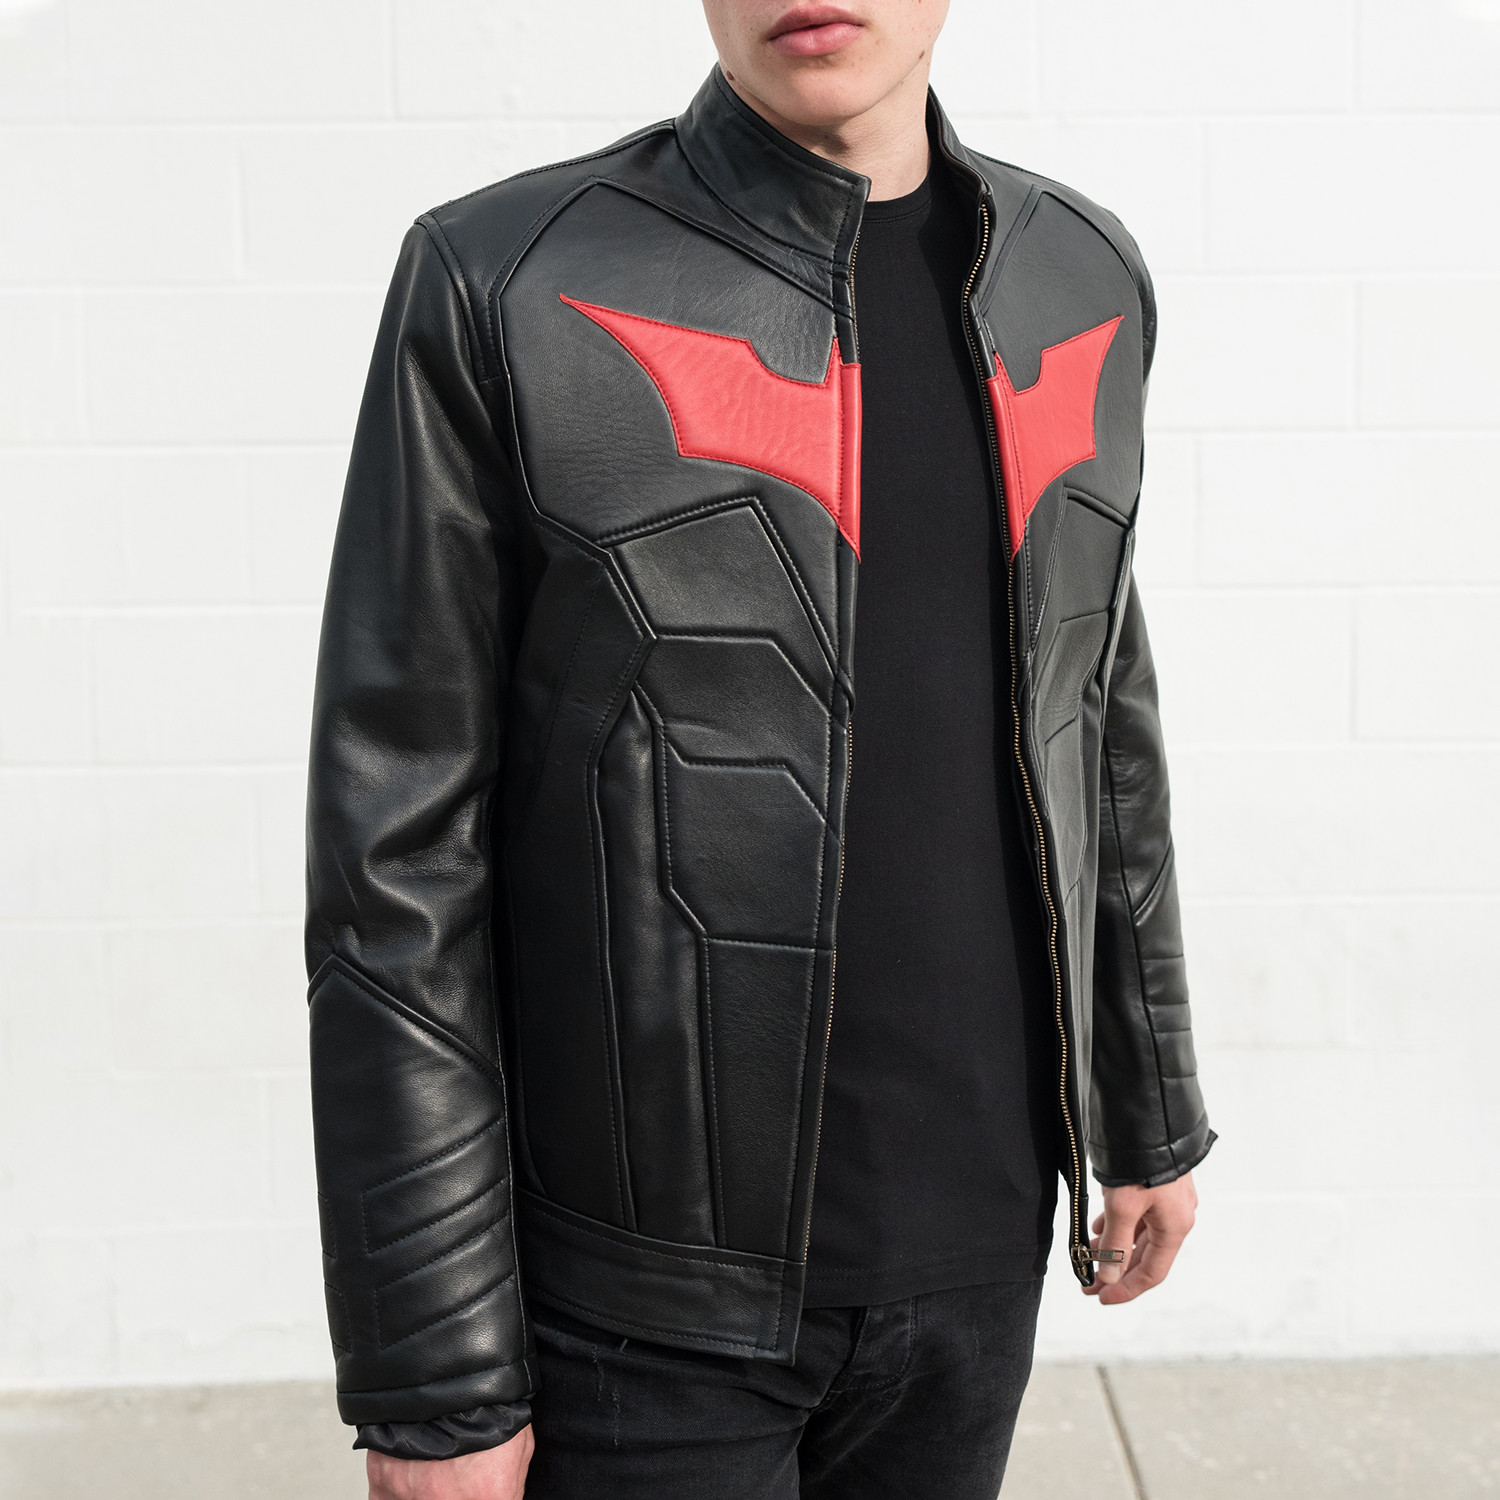 Batman Padded Motorcycle Leather Jacket // Black + Red Bat (XS) - Luca